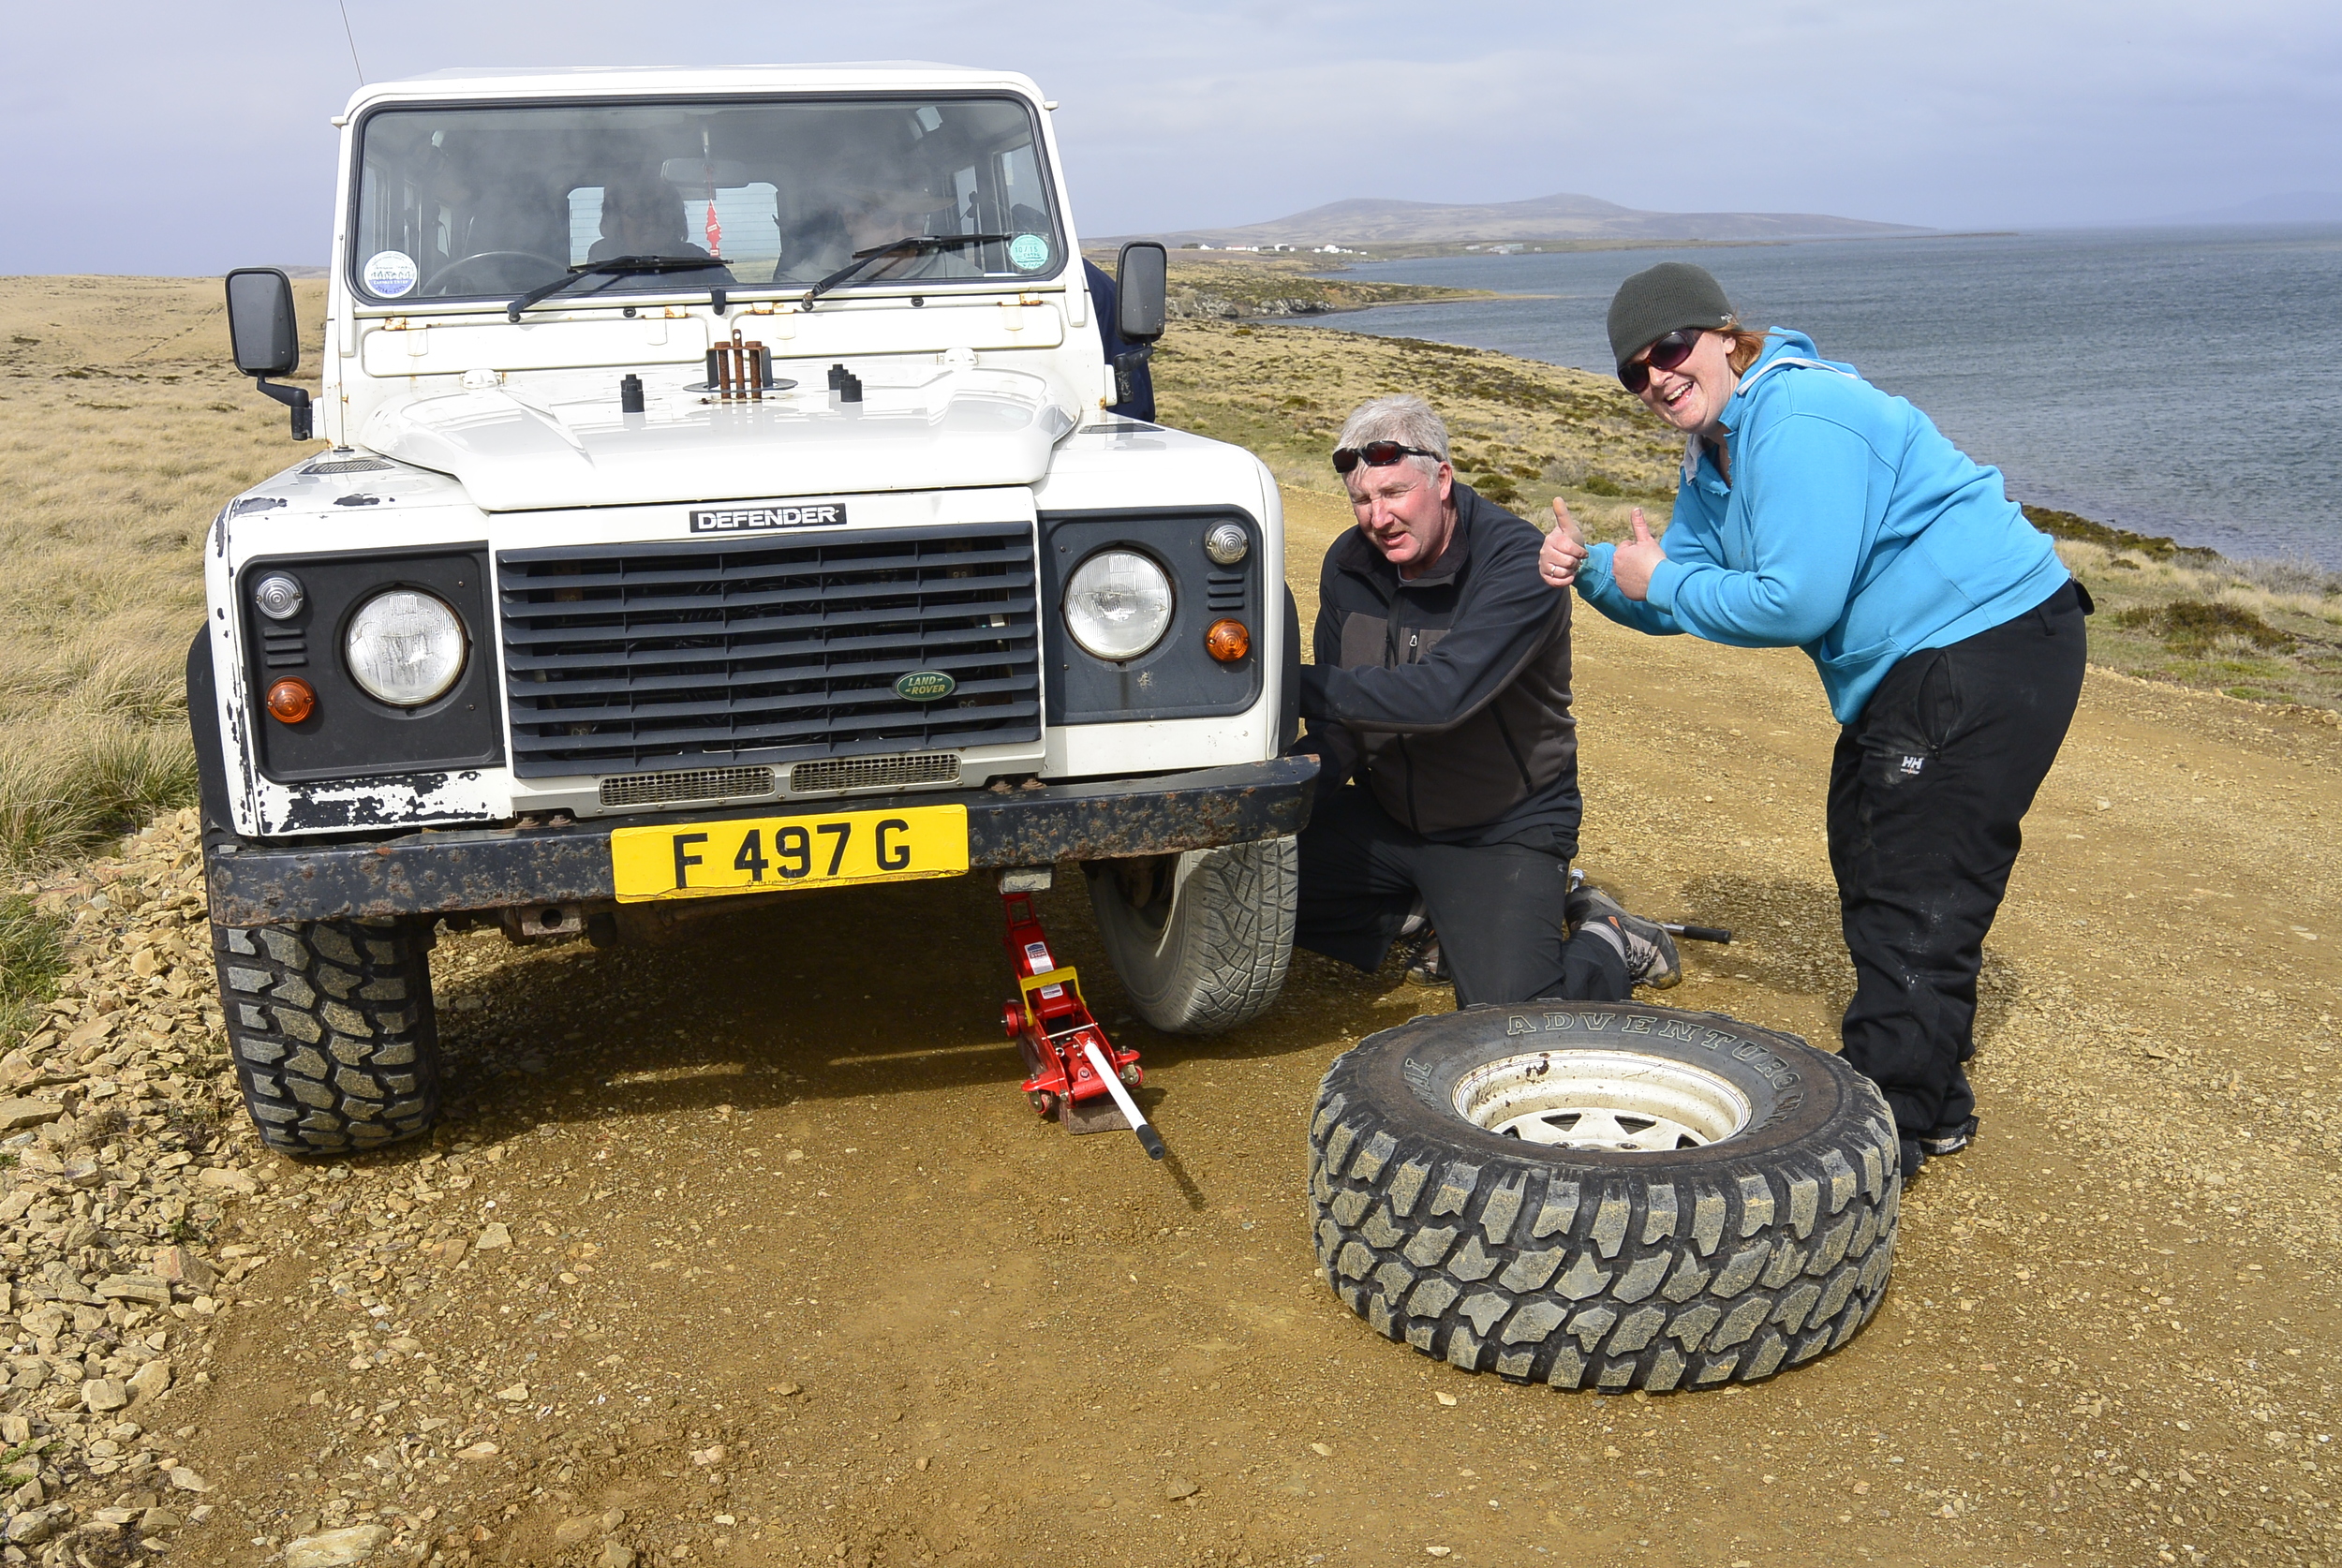 Falkland Islands Land Rover Flat Tire